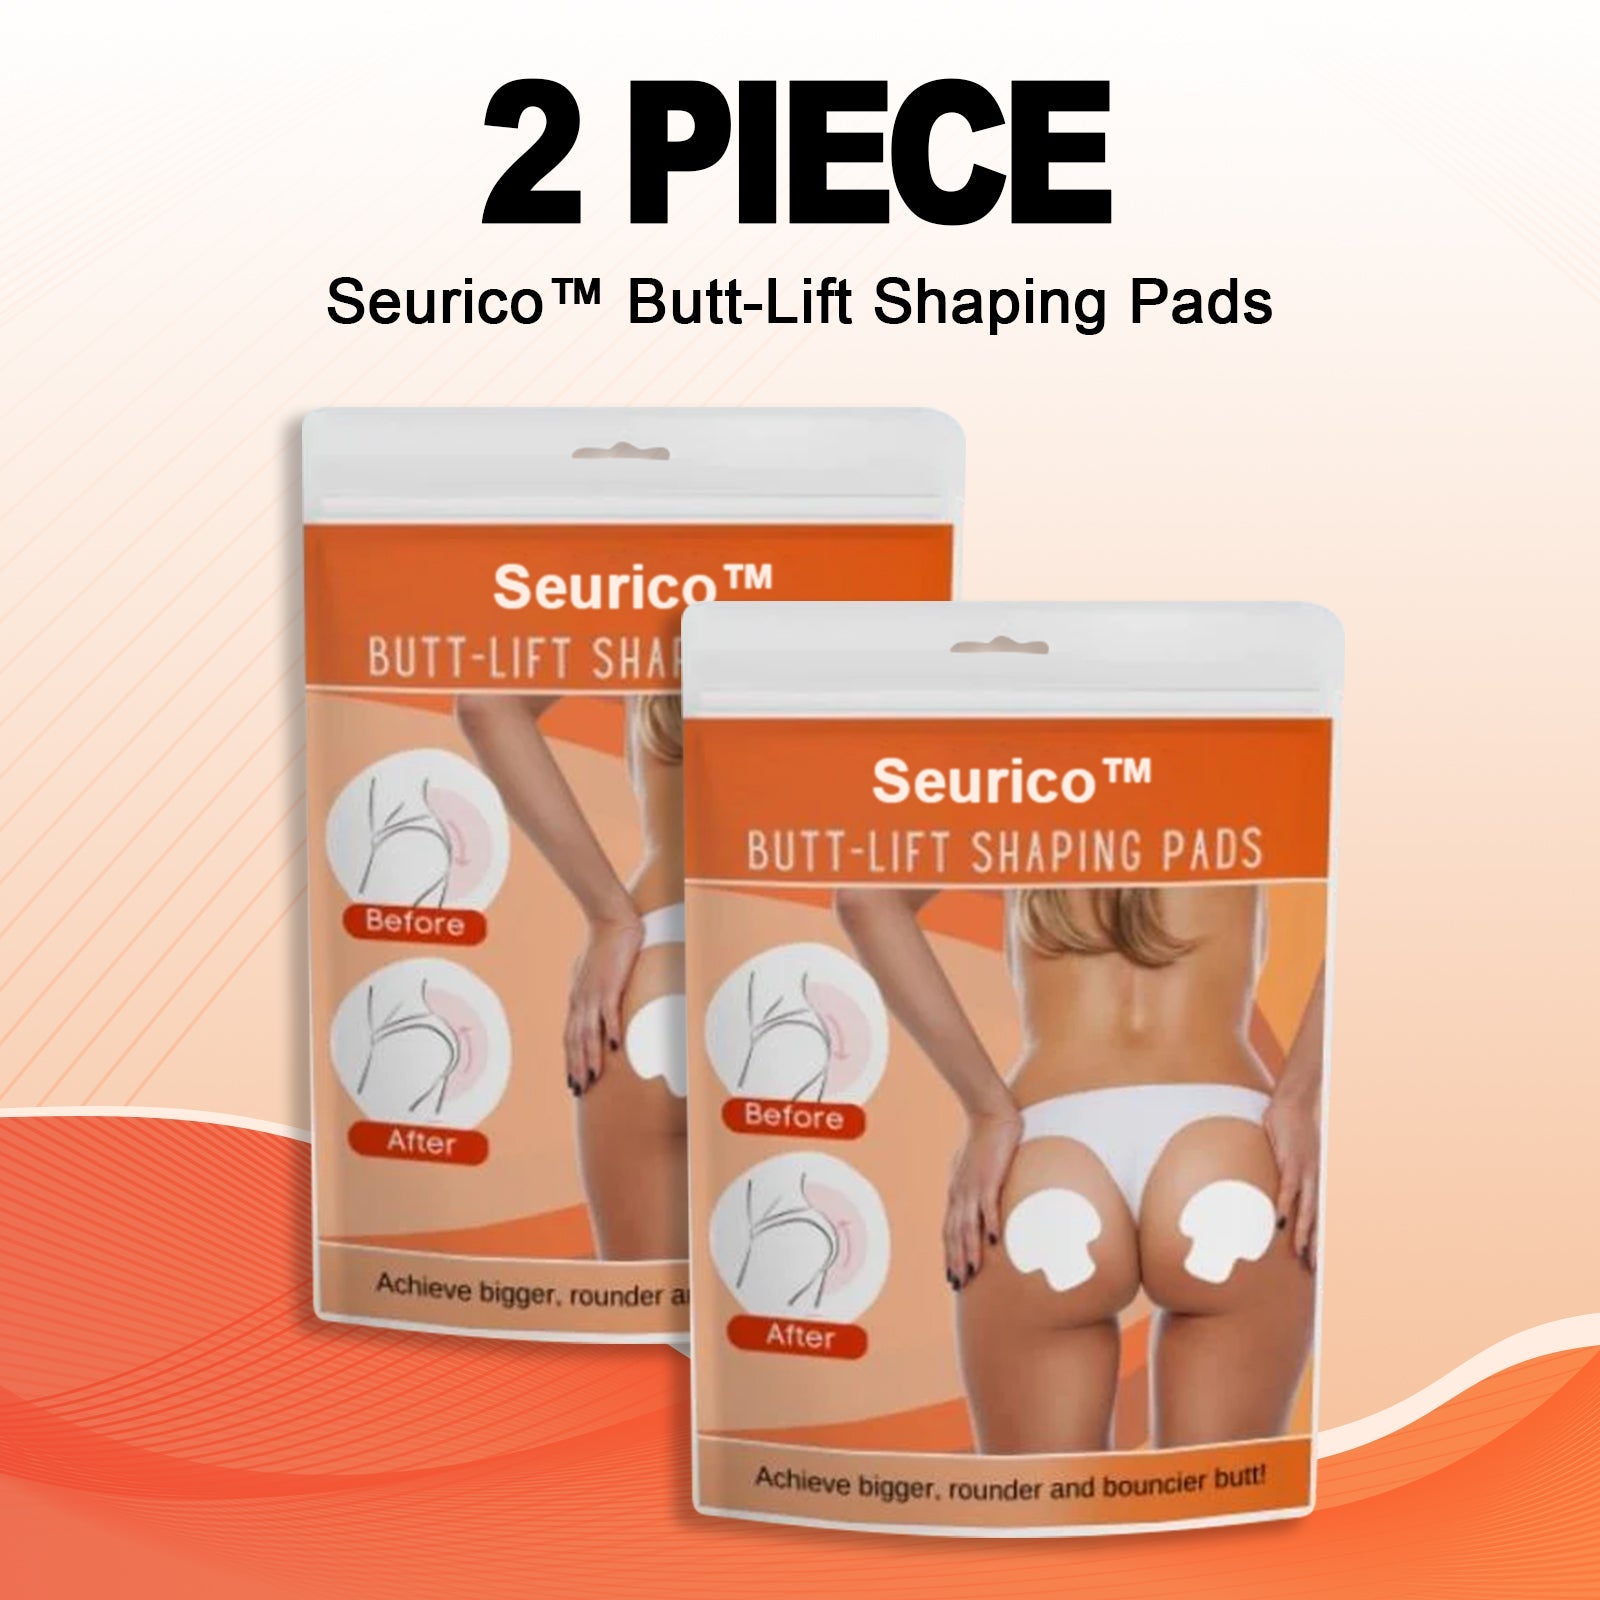 Seurico™ Butt-Lift Shaping Pads